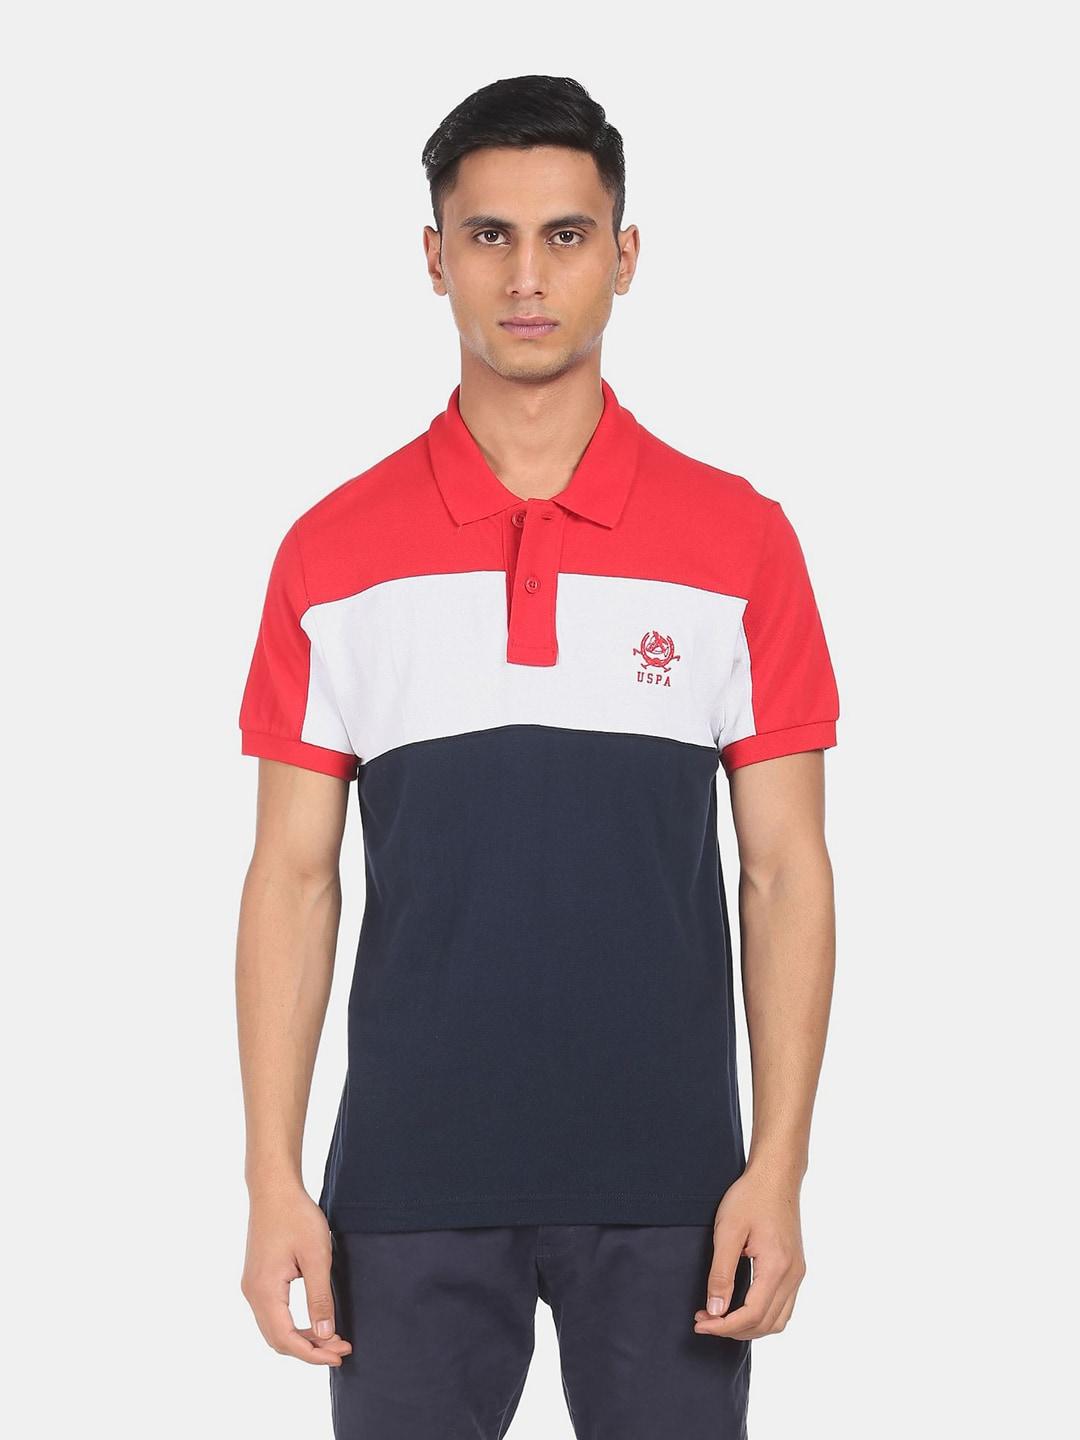 u-s-polo-assn-men-red-&-navy-blue-colourblocked-polo-collar-pure-cotton-slim-fit-t-shirt